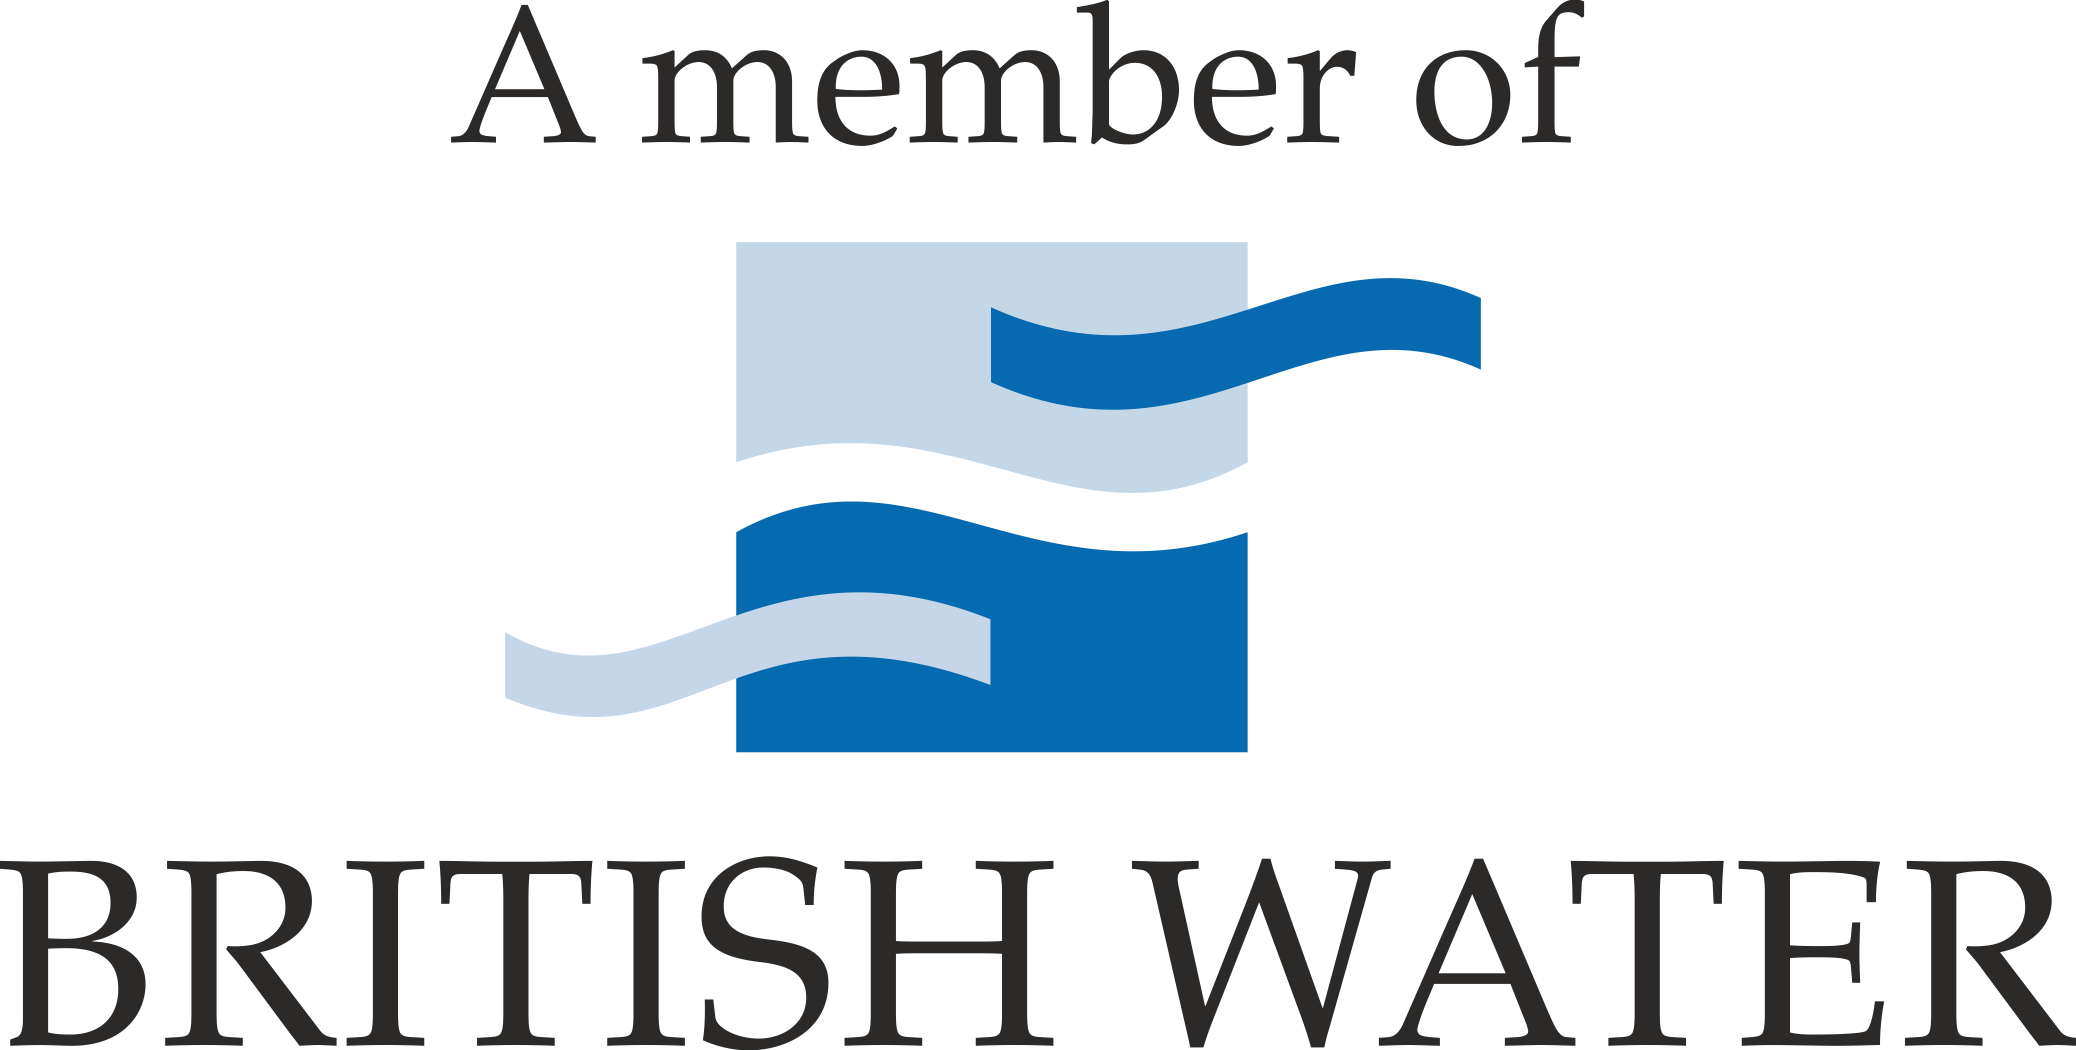 British Water membership logo for beyond water and award winning water charity